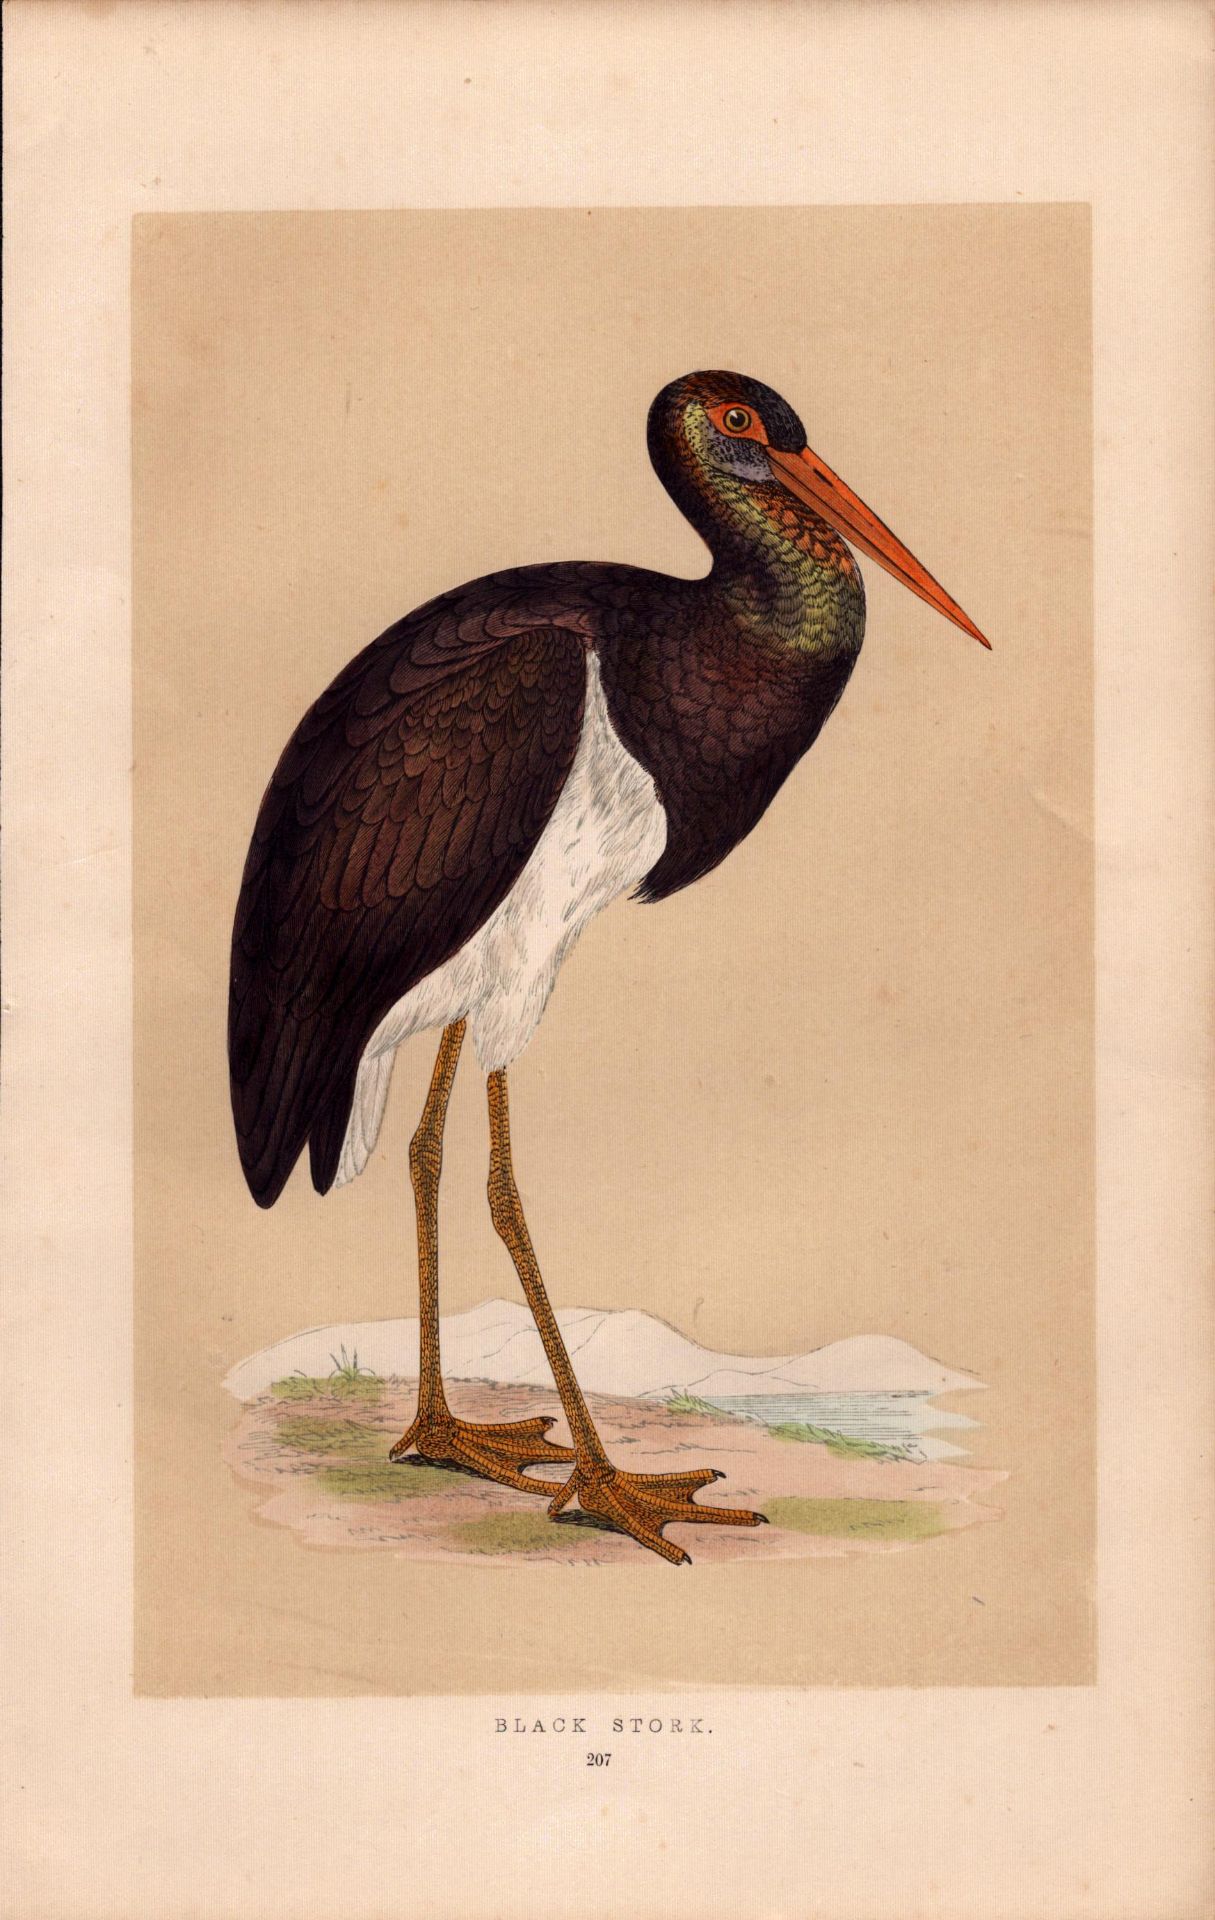 Black Stork Rev Morris Antique History of British Birds Engraving.